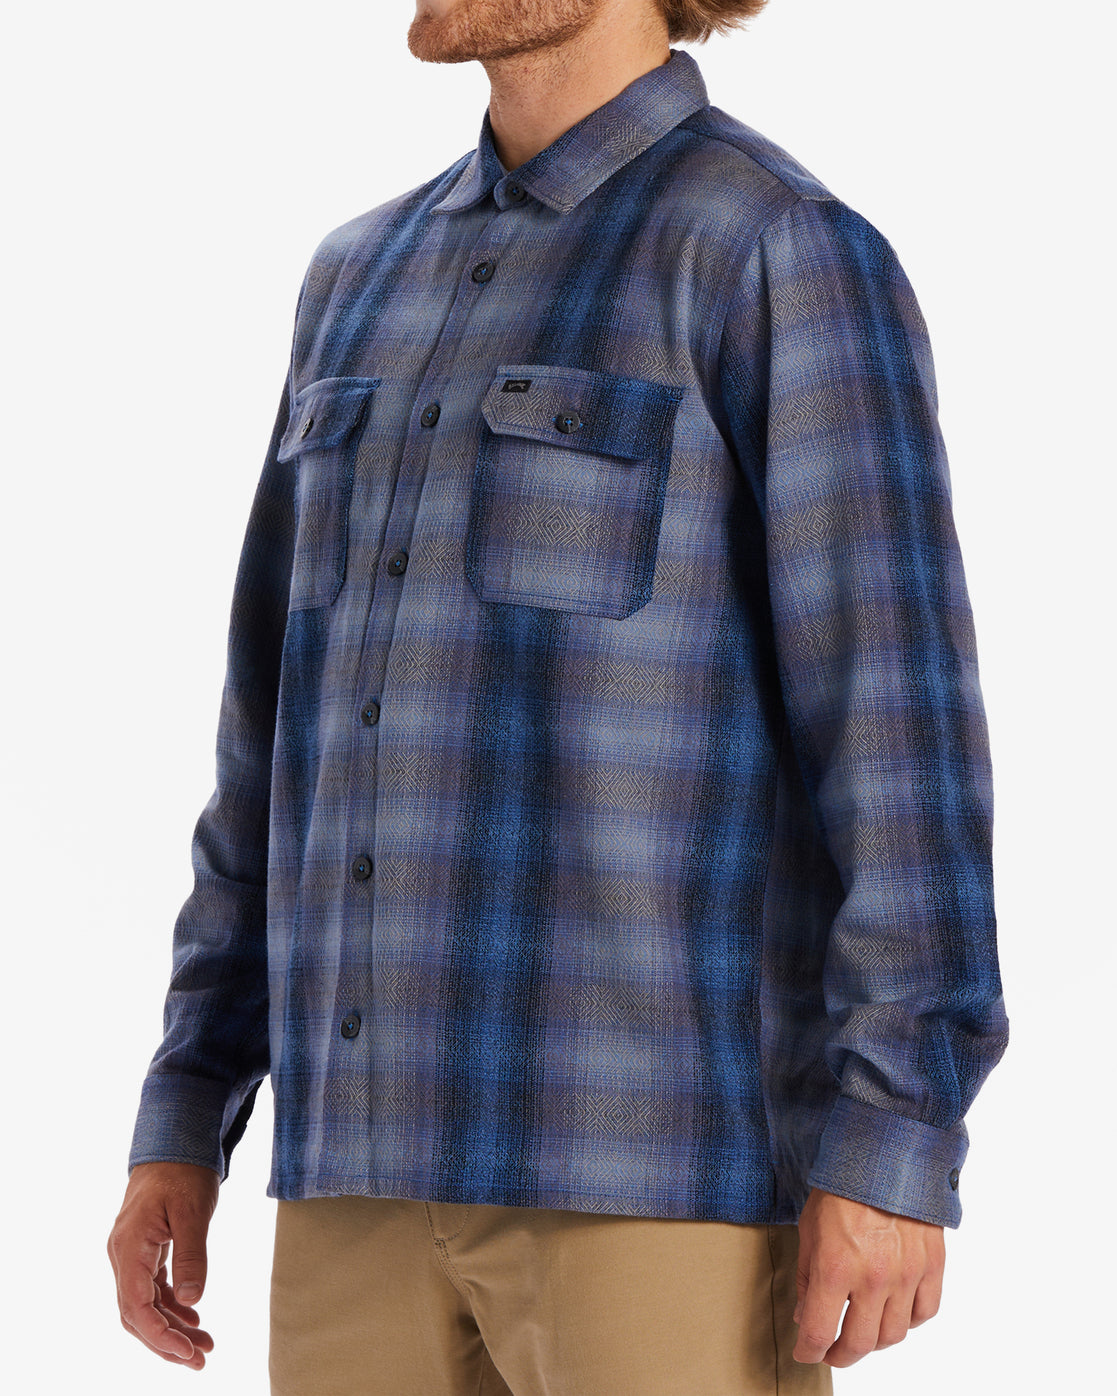 Billabong Mens Offshore Jacquard Flannel Shirt